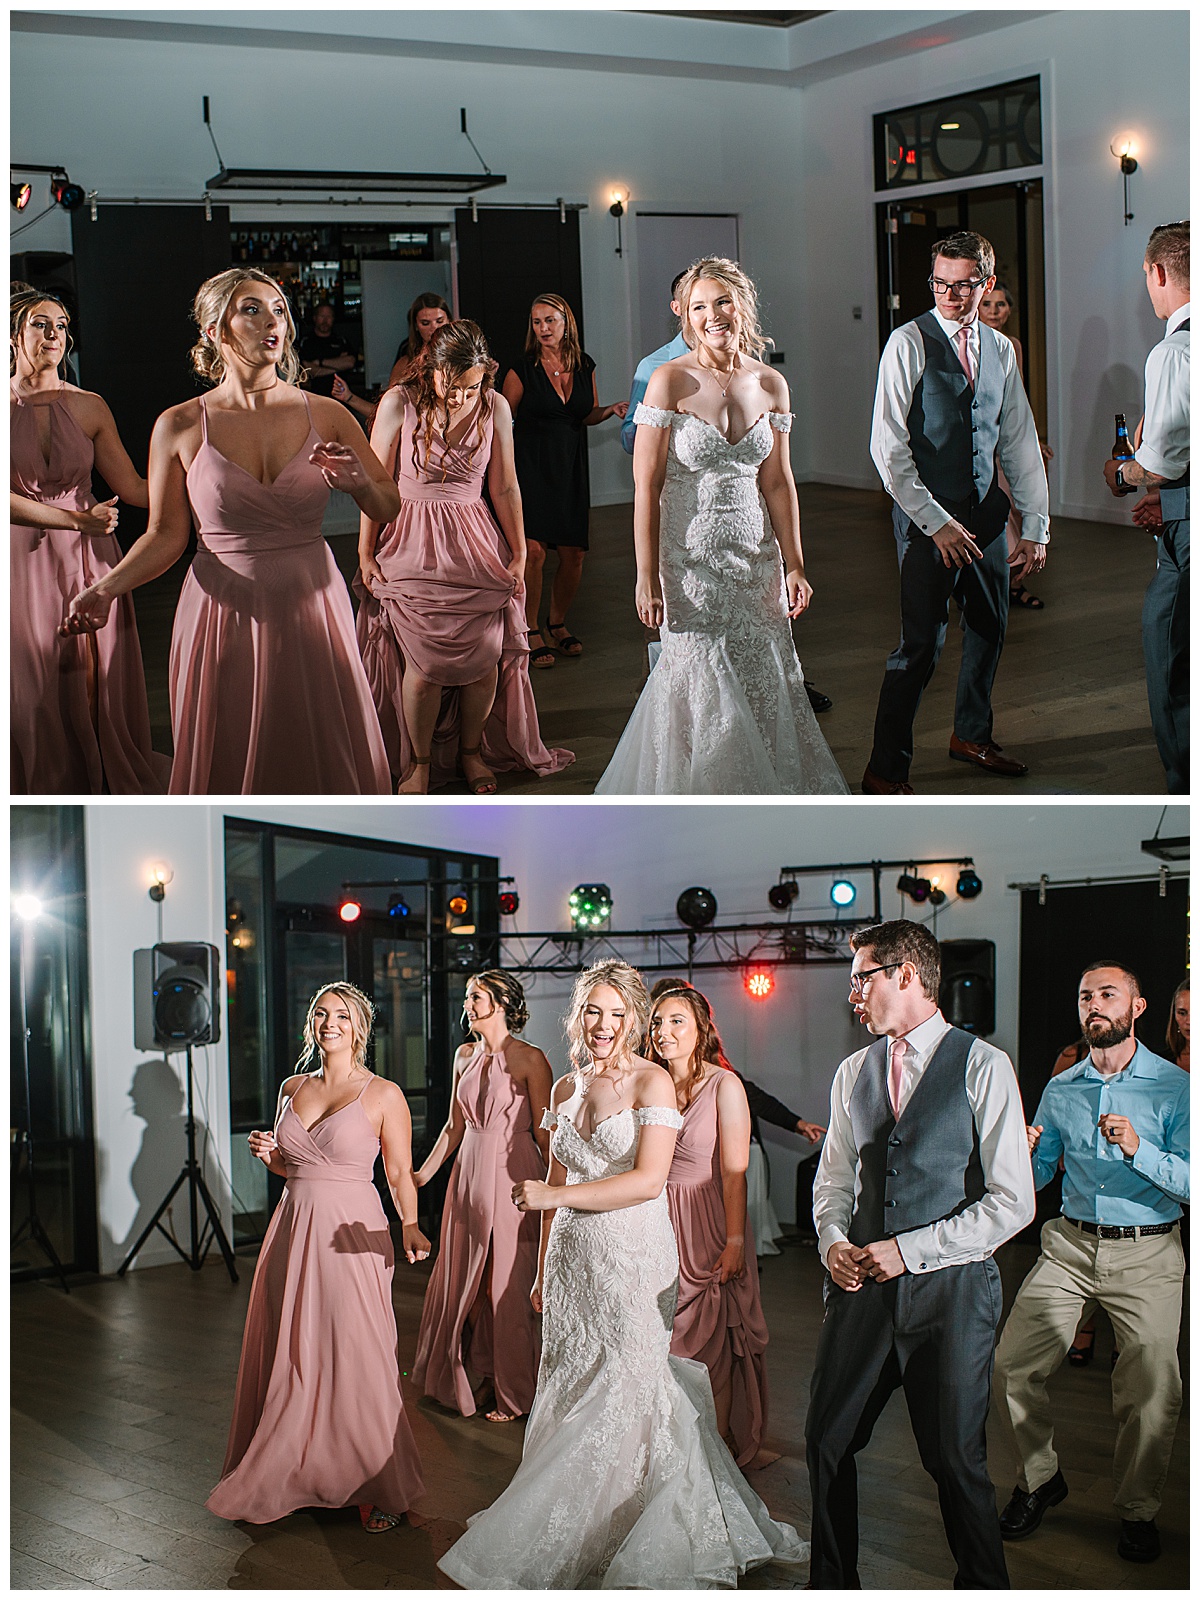 Everyone on the dance floor by Michigan Wedding Photographer